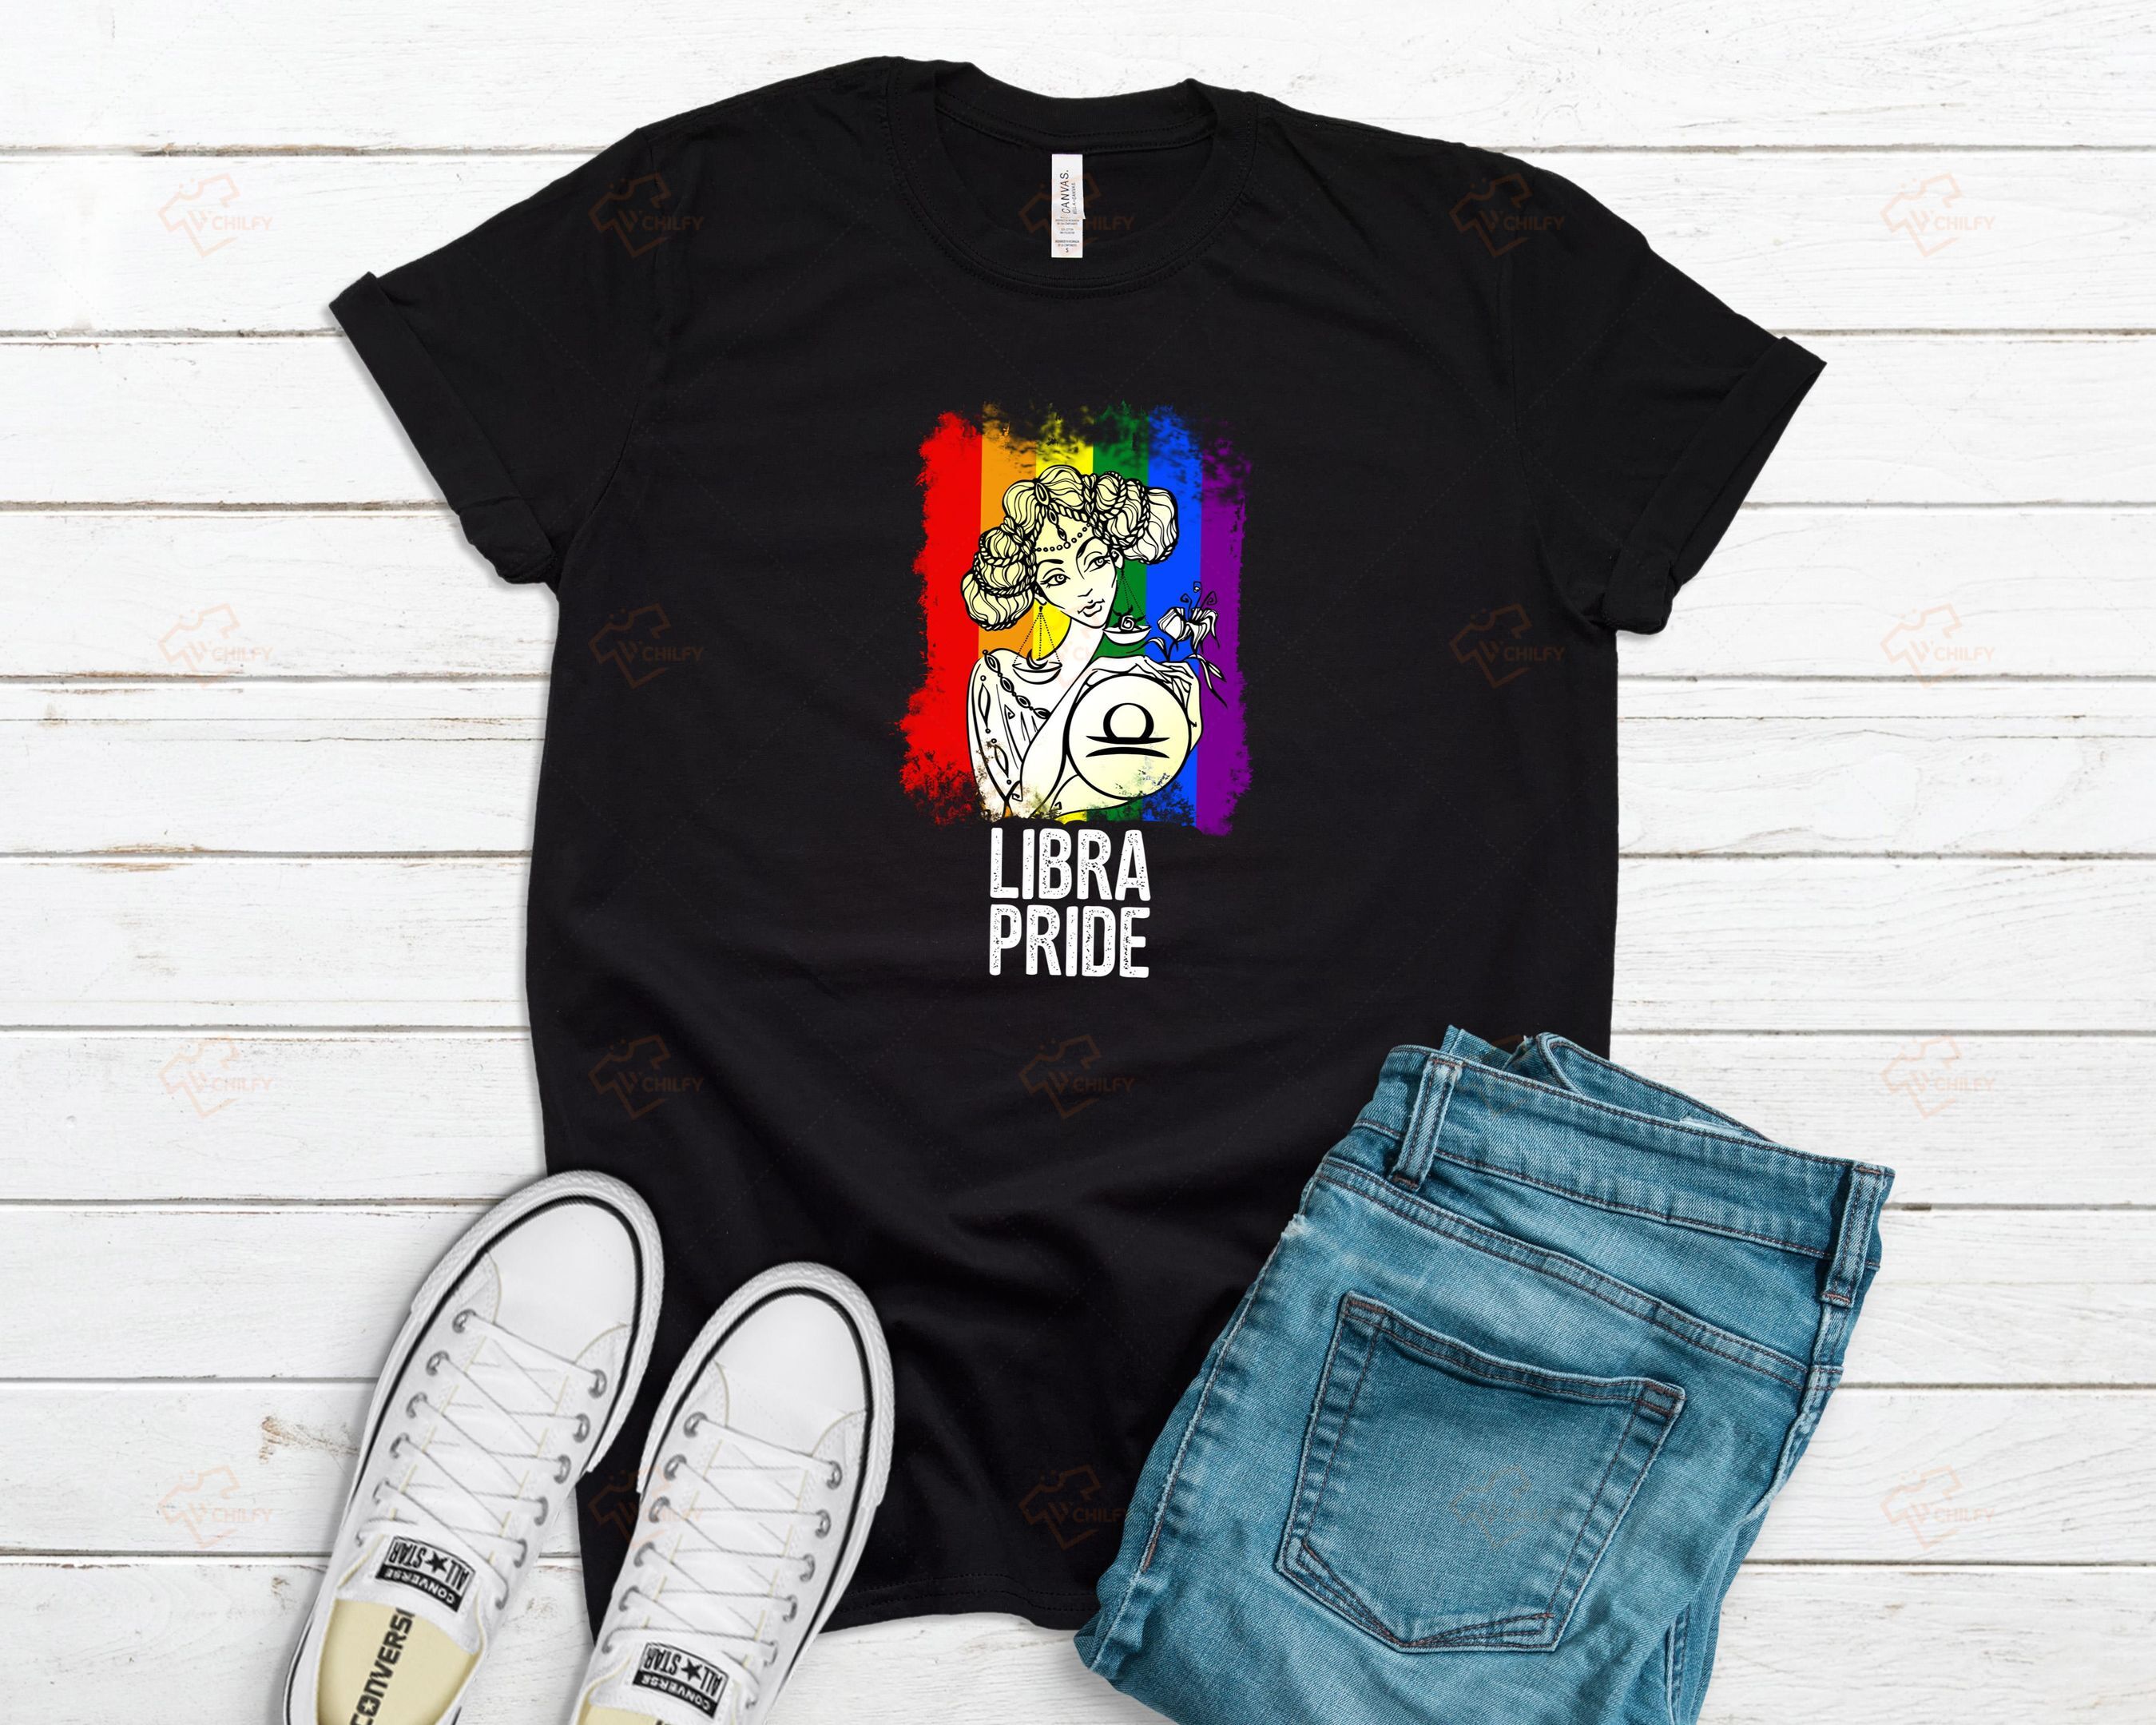 12 Signs Of The Zodiac Libra Shirt, Lgbt Shirt, Lgbt Pride Shirt, Lgbt Queer, Lgbt Zodiac Shirt